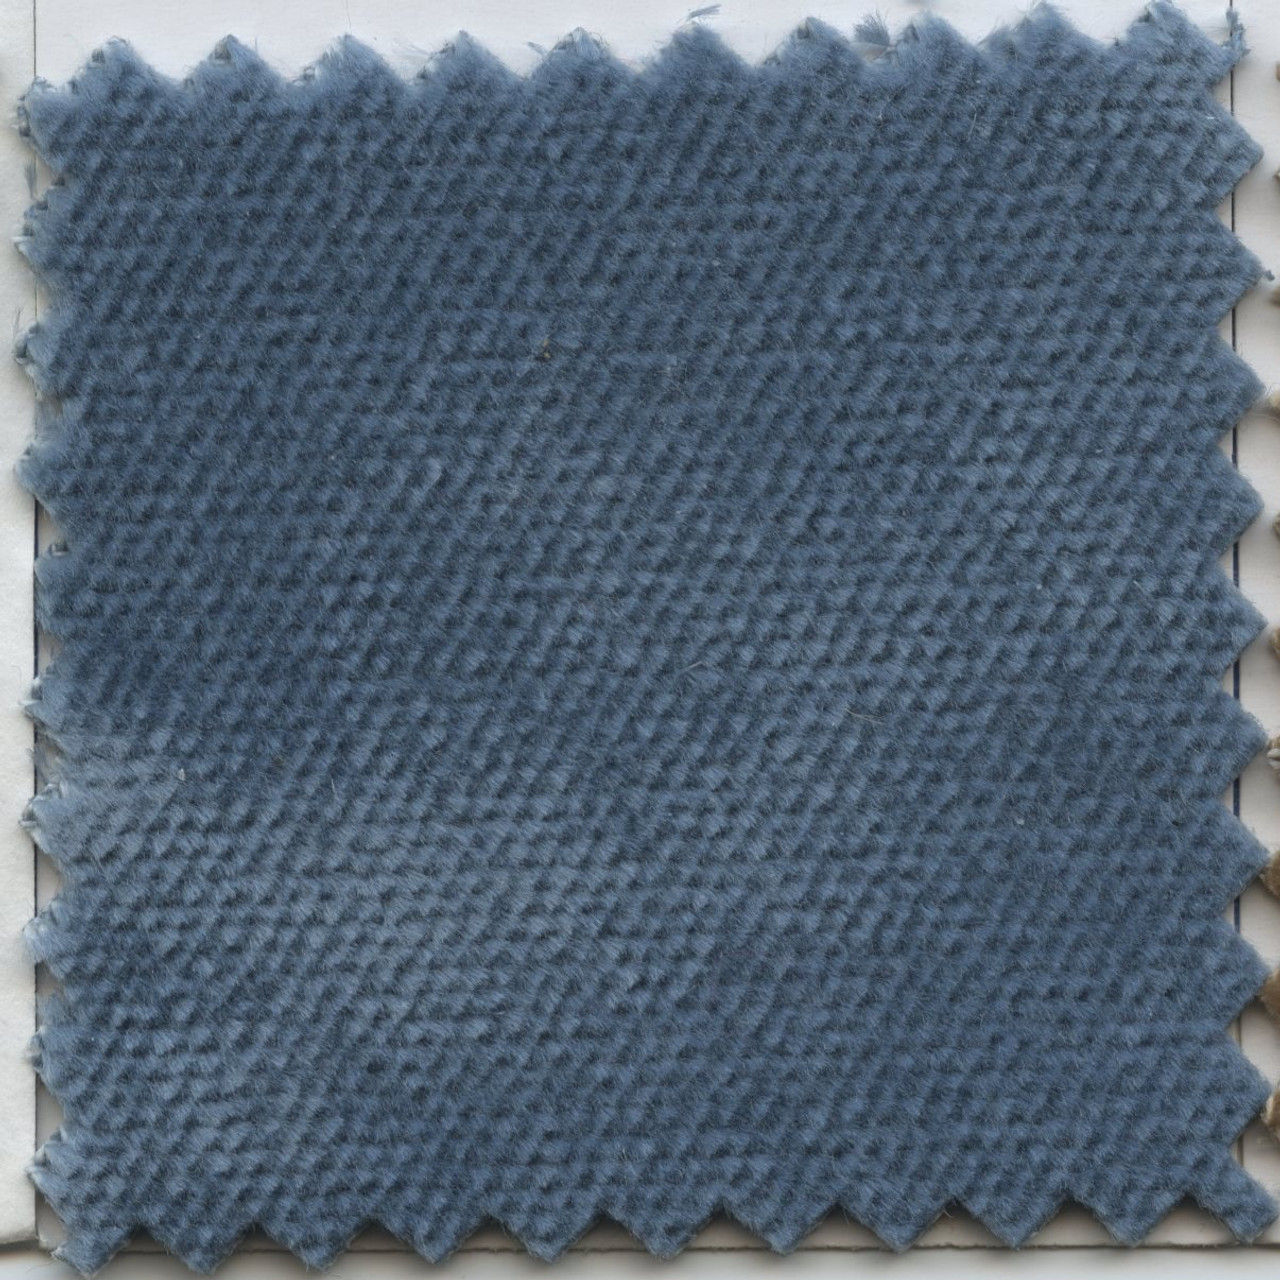 NC2009S - Small Medium Blue Carpet